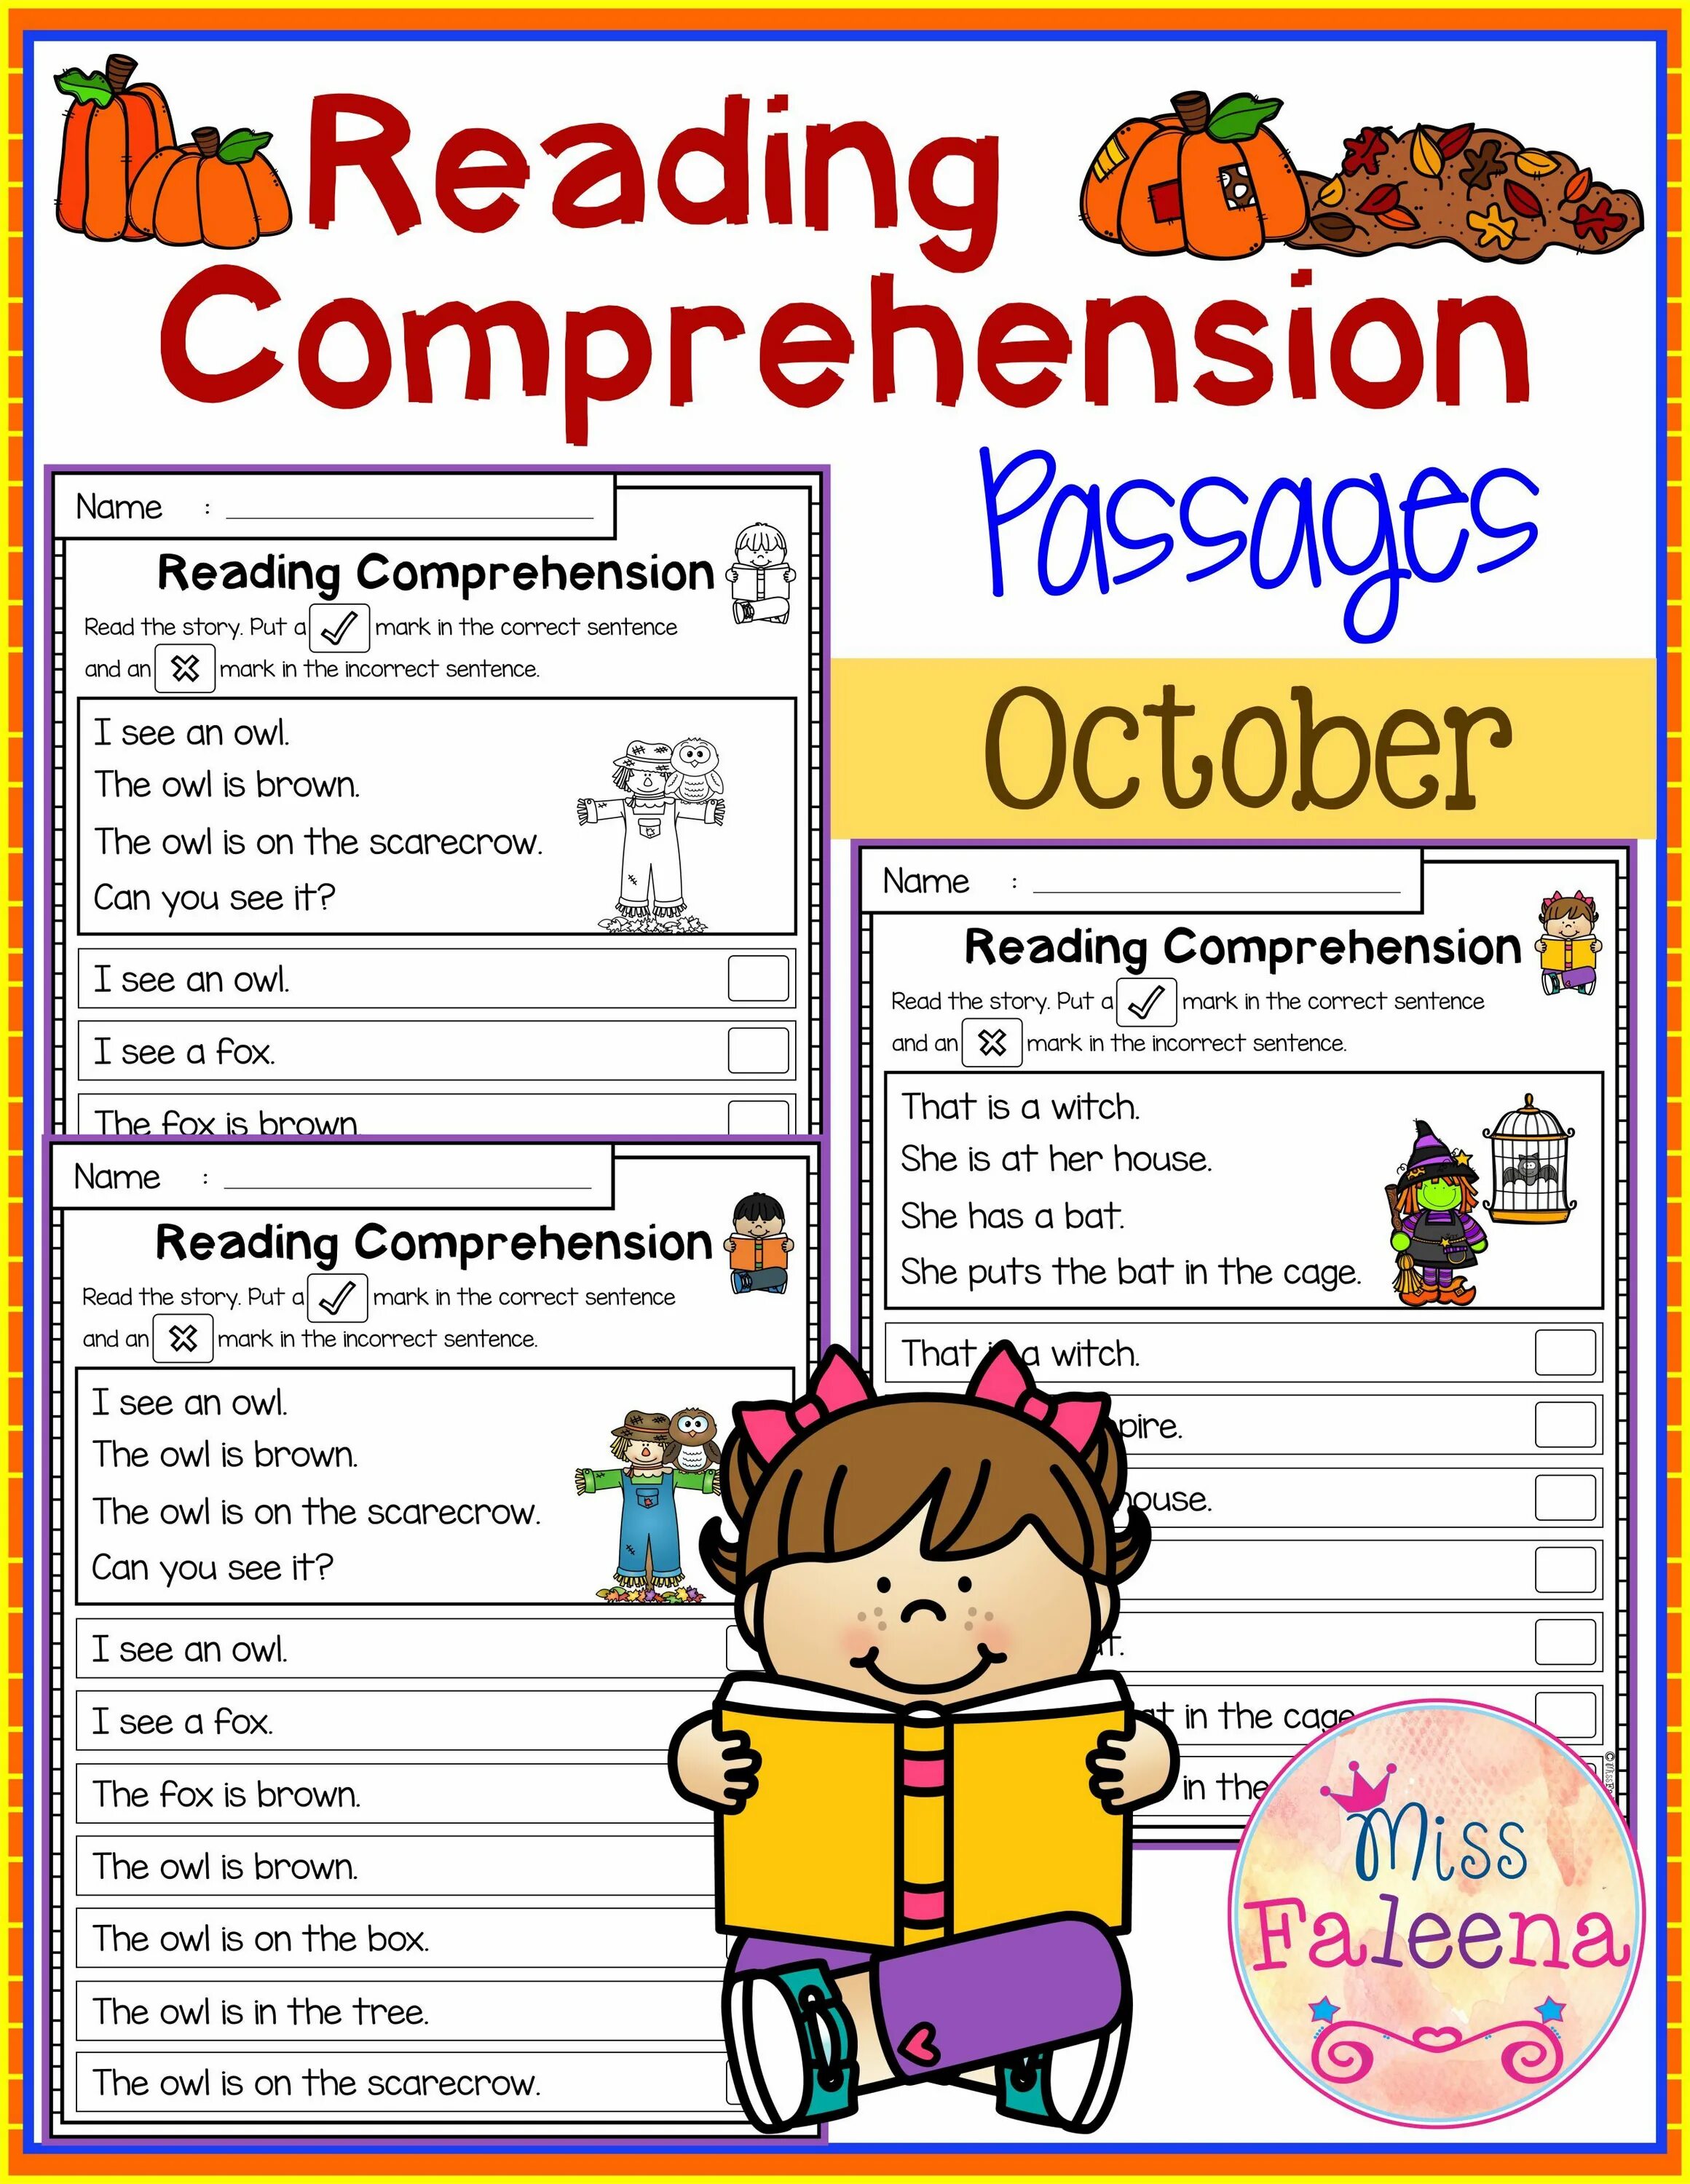 Reading задание 6. Reading Comprehension. Reading Comprehension tasks. Reading Comprehension a2. Reading Comprehension for Kids.